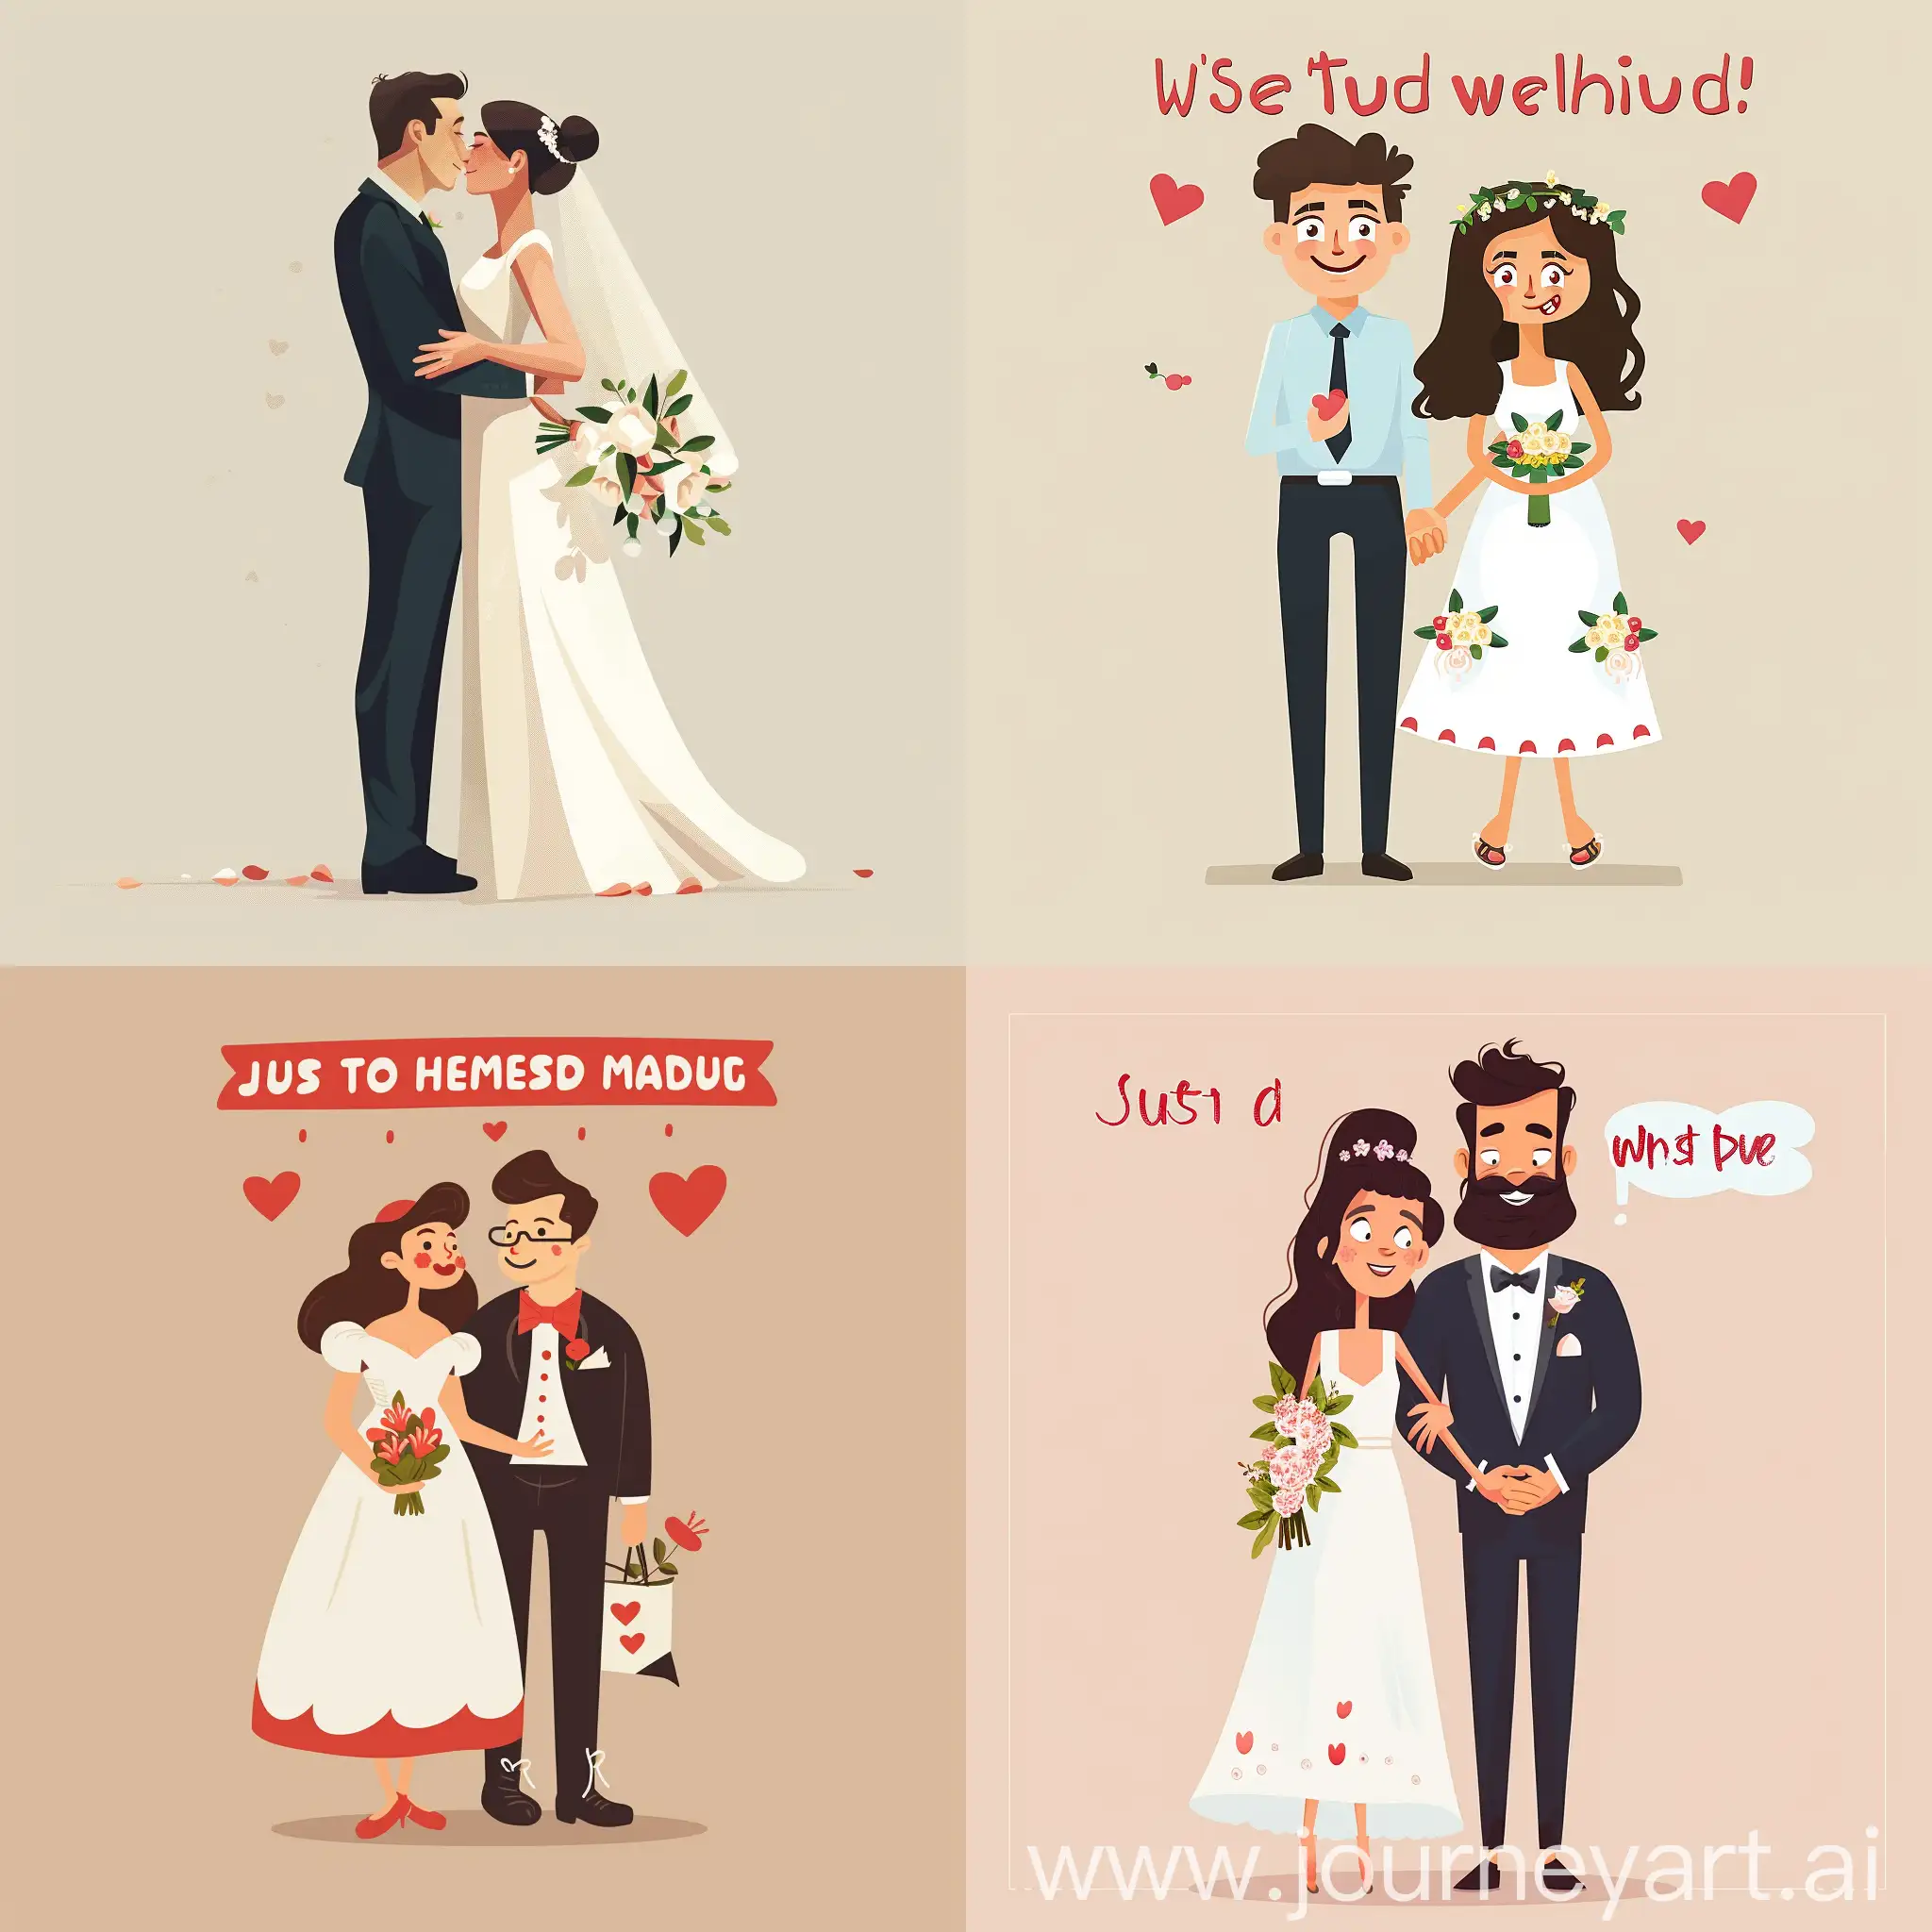 Joyful-Newlyweds-Celebrating-Love-in-Elegant-2D-Vector-Illustration